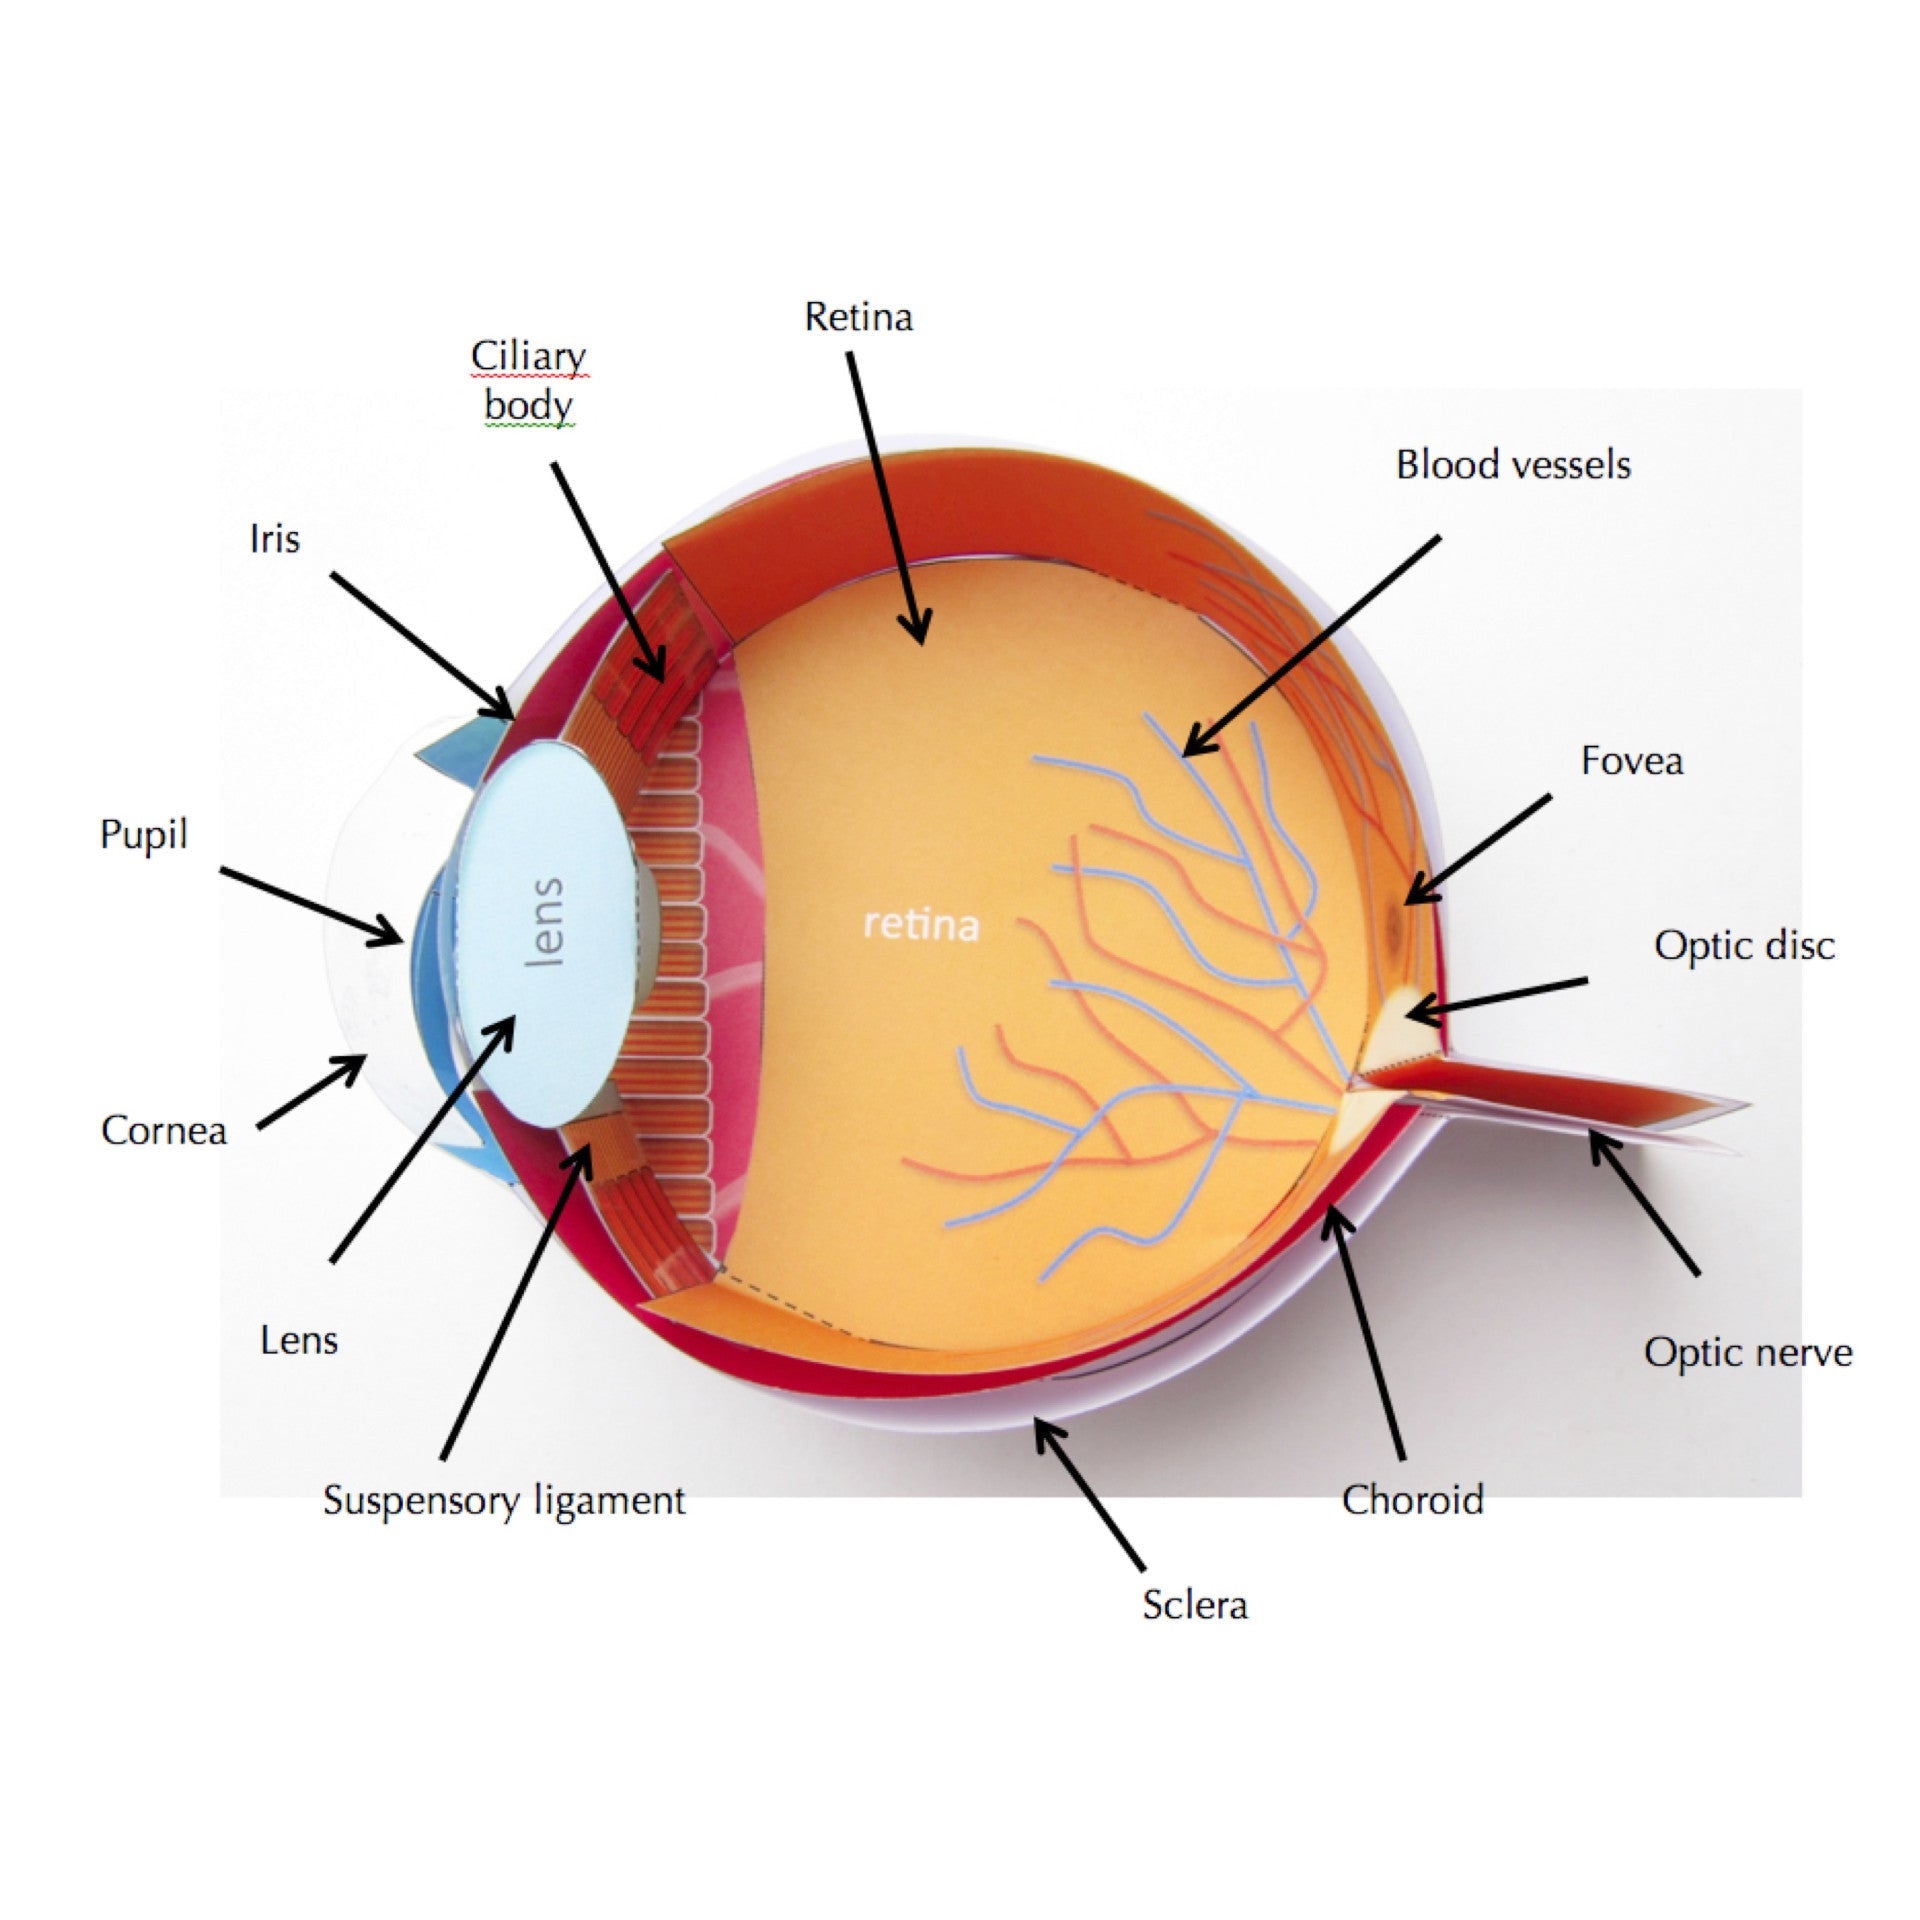 Iris-Pupil-Lens